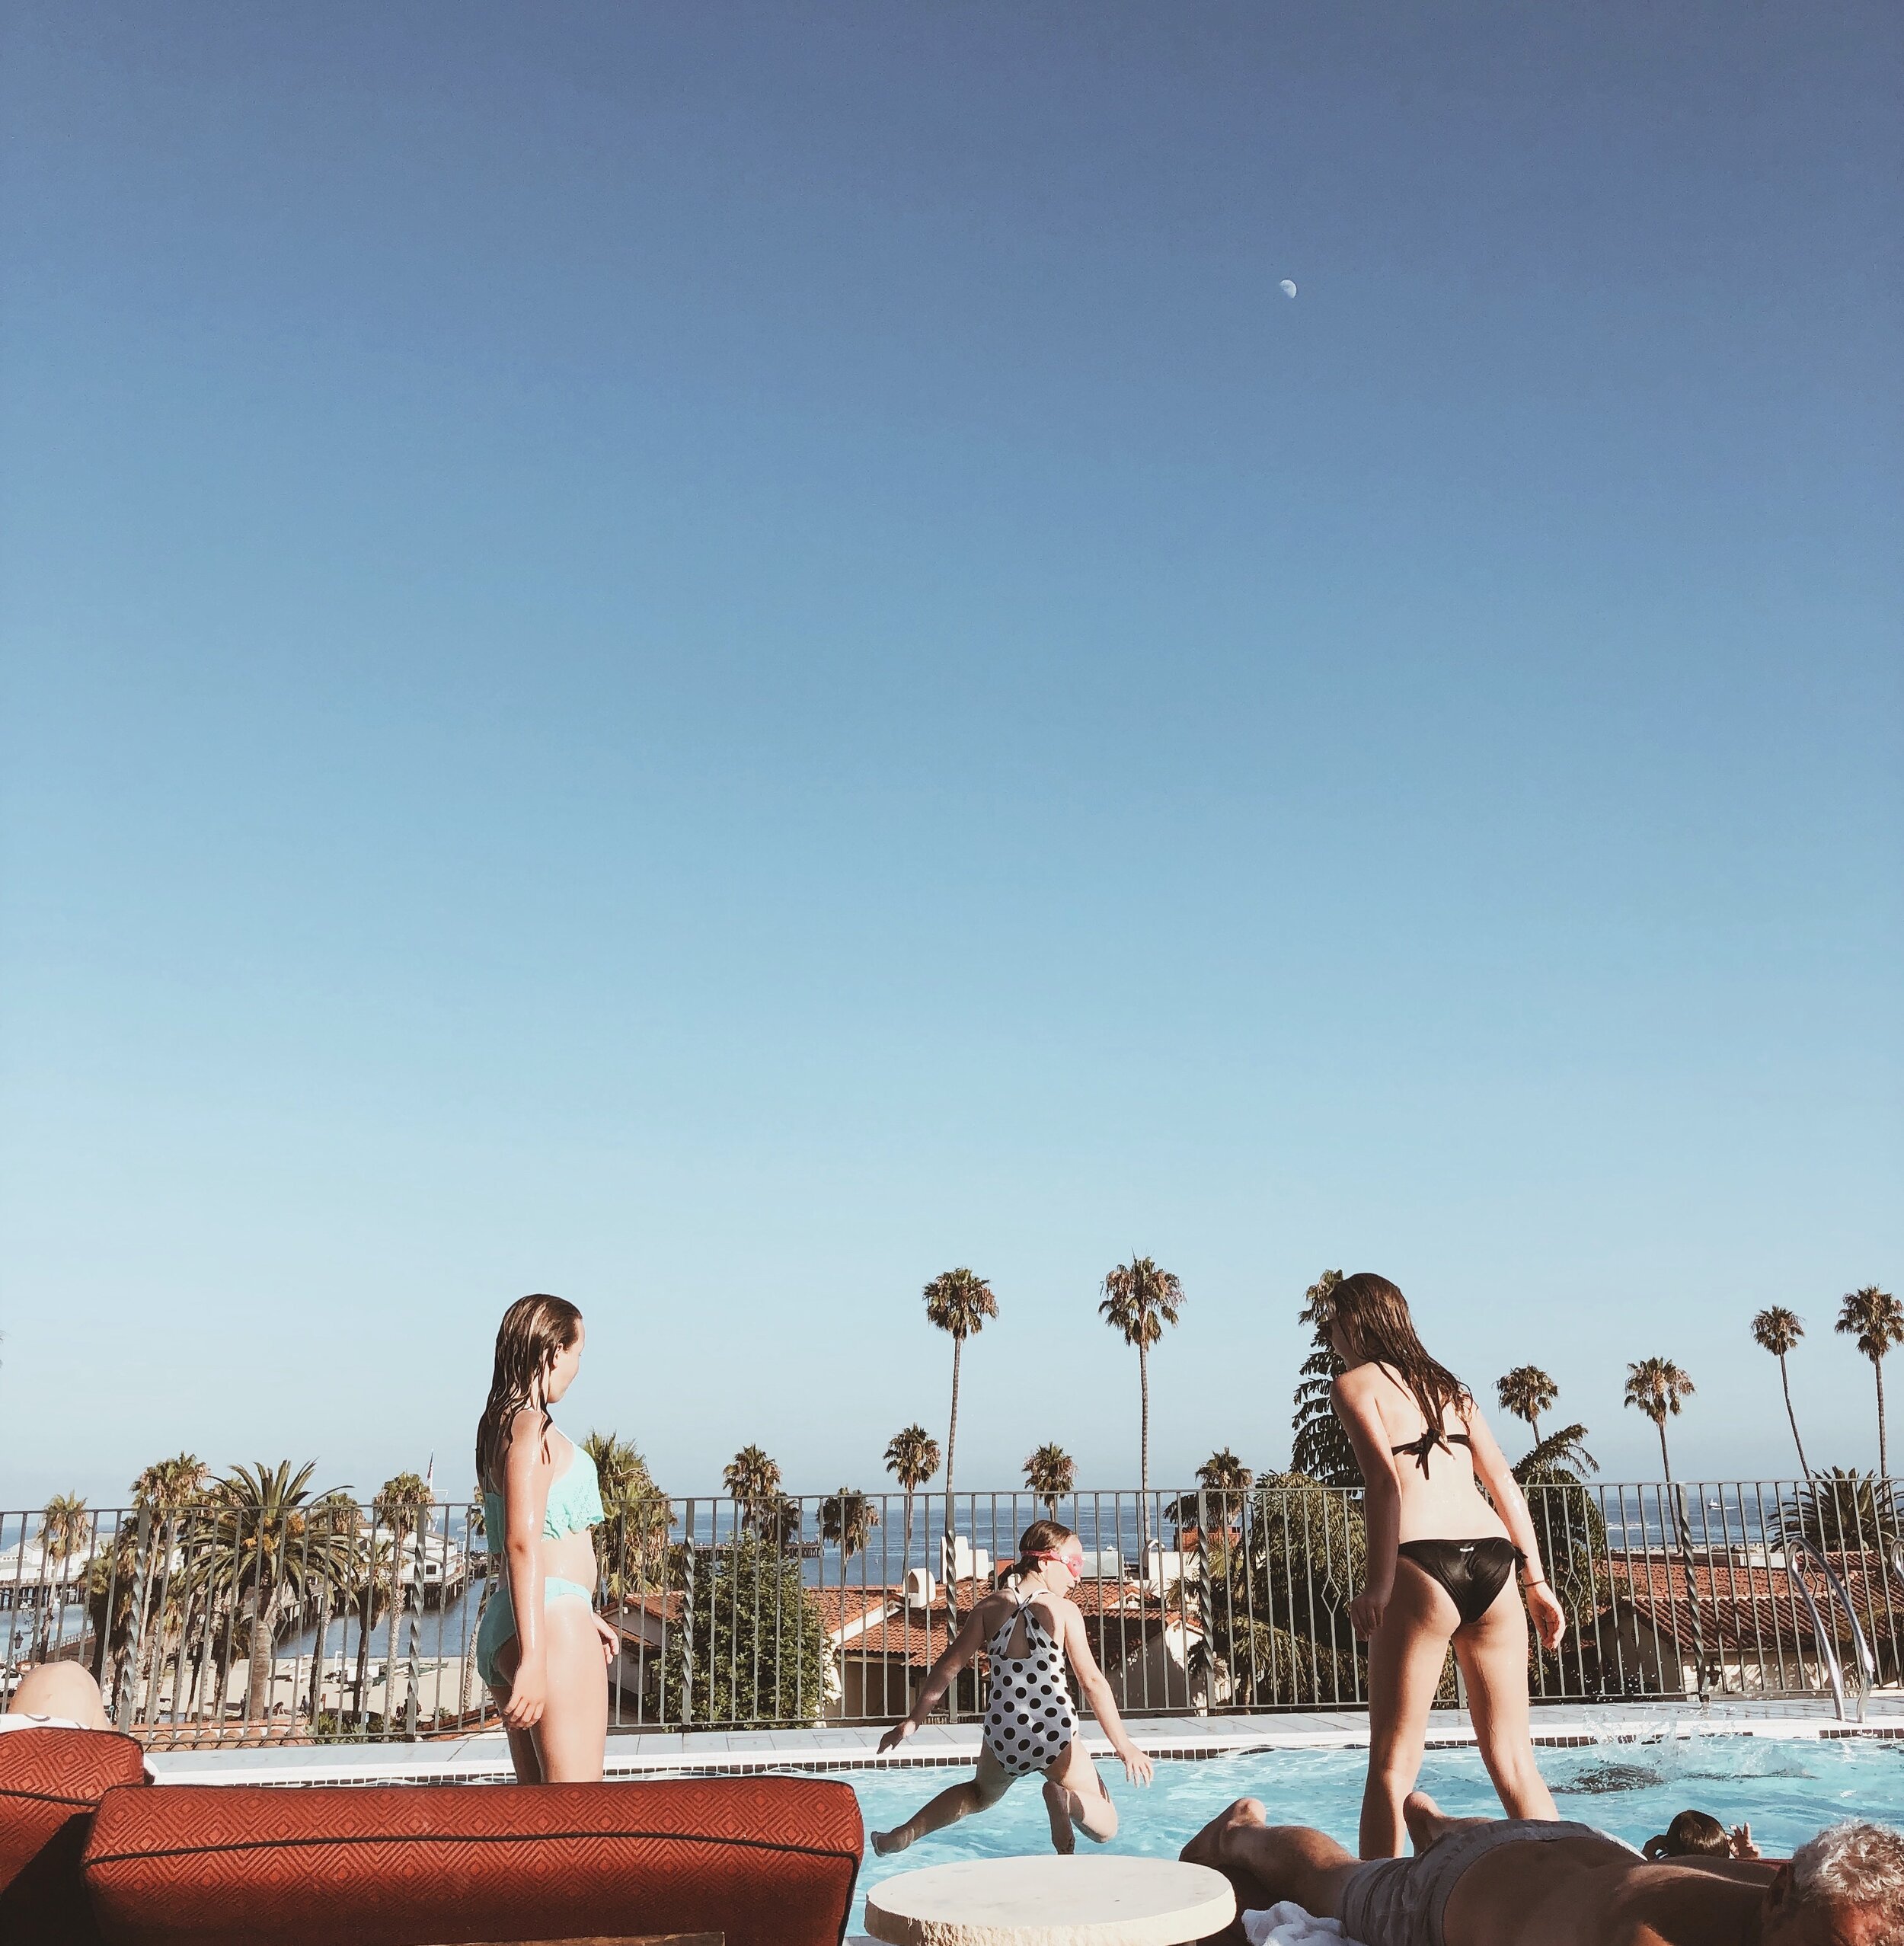 The Californian hotel pool, Santa Barbara